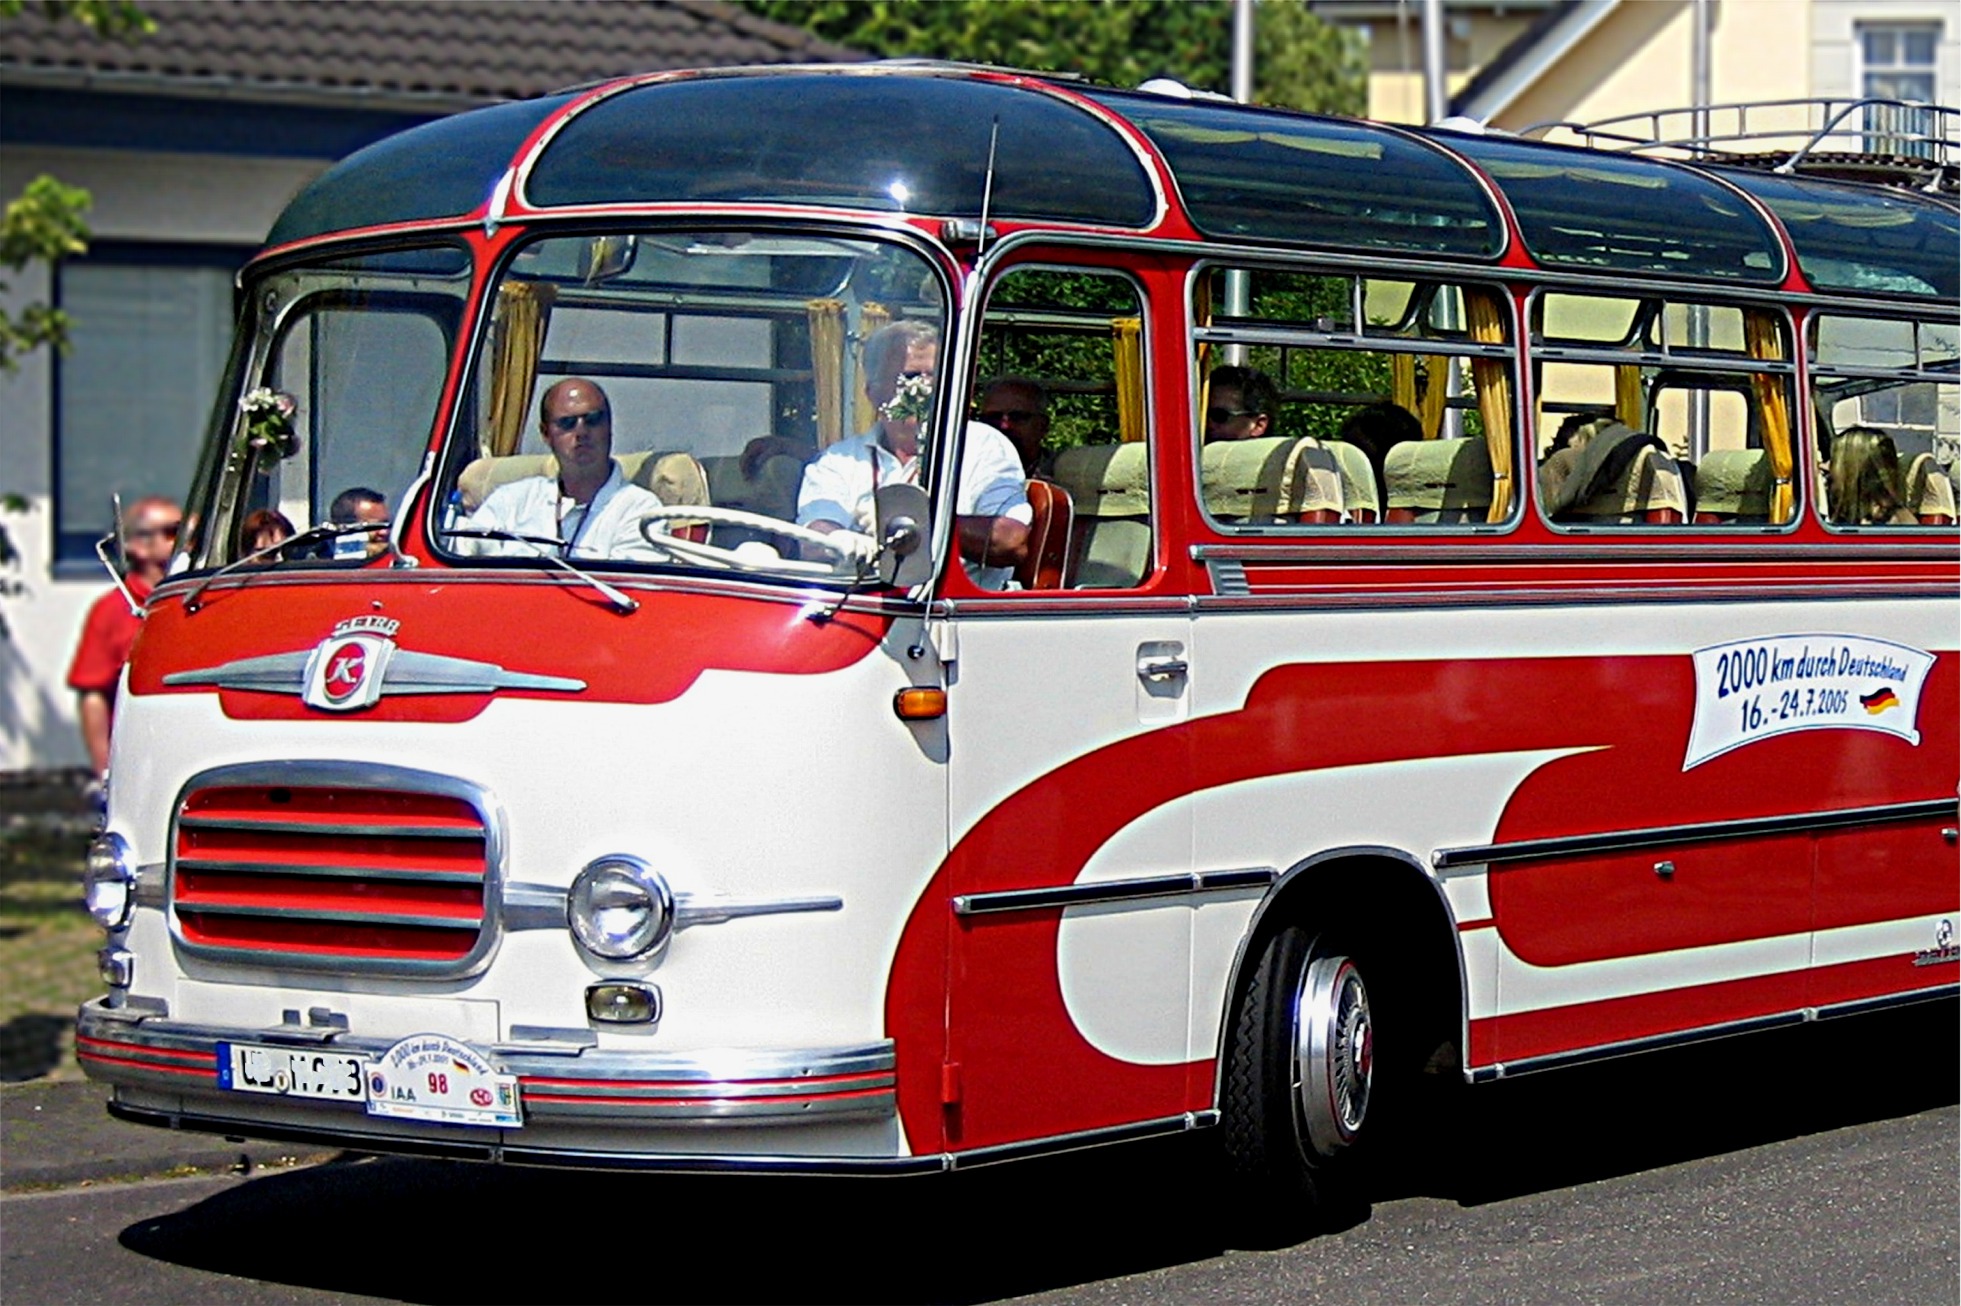 File:Setra-Bus mit Panoramafenstern.jpg - Wikimedia Commons